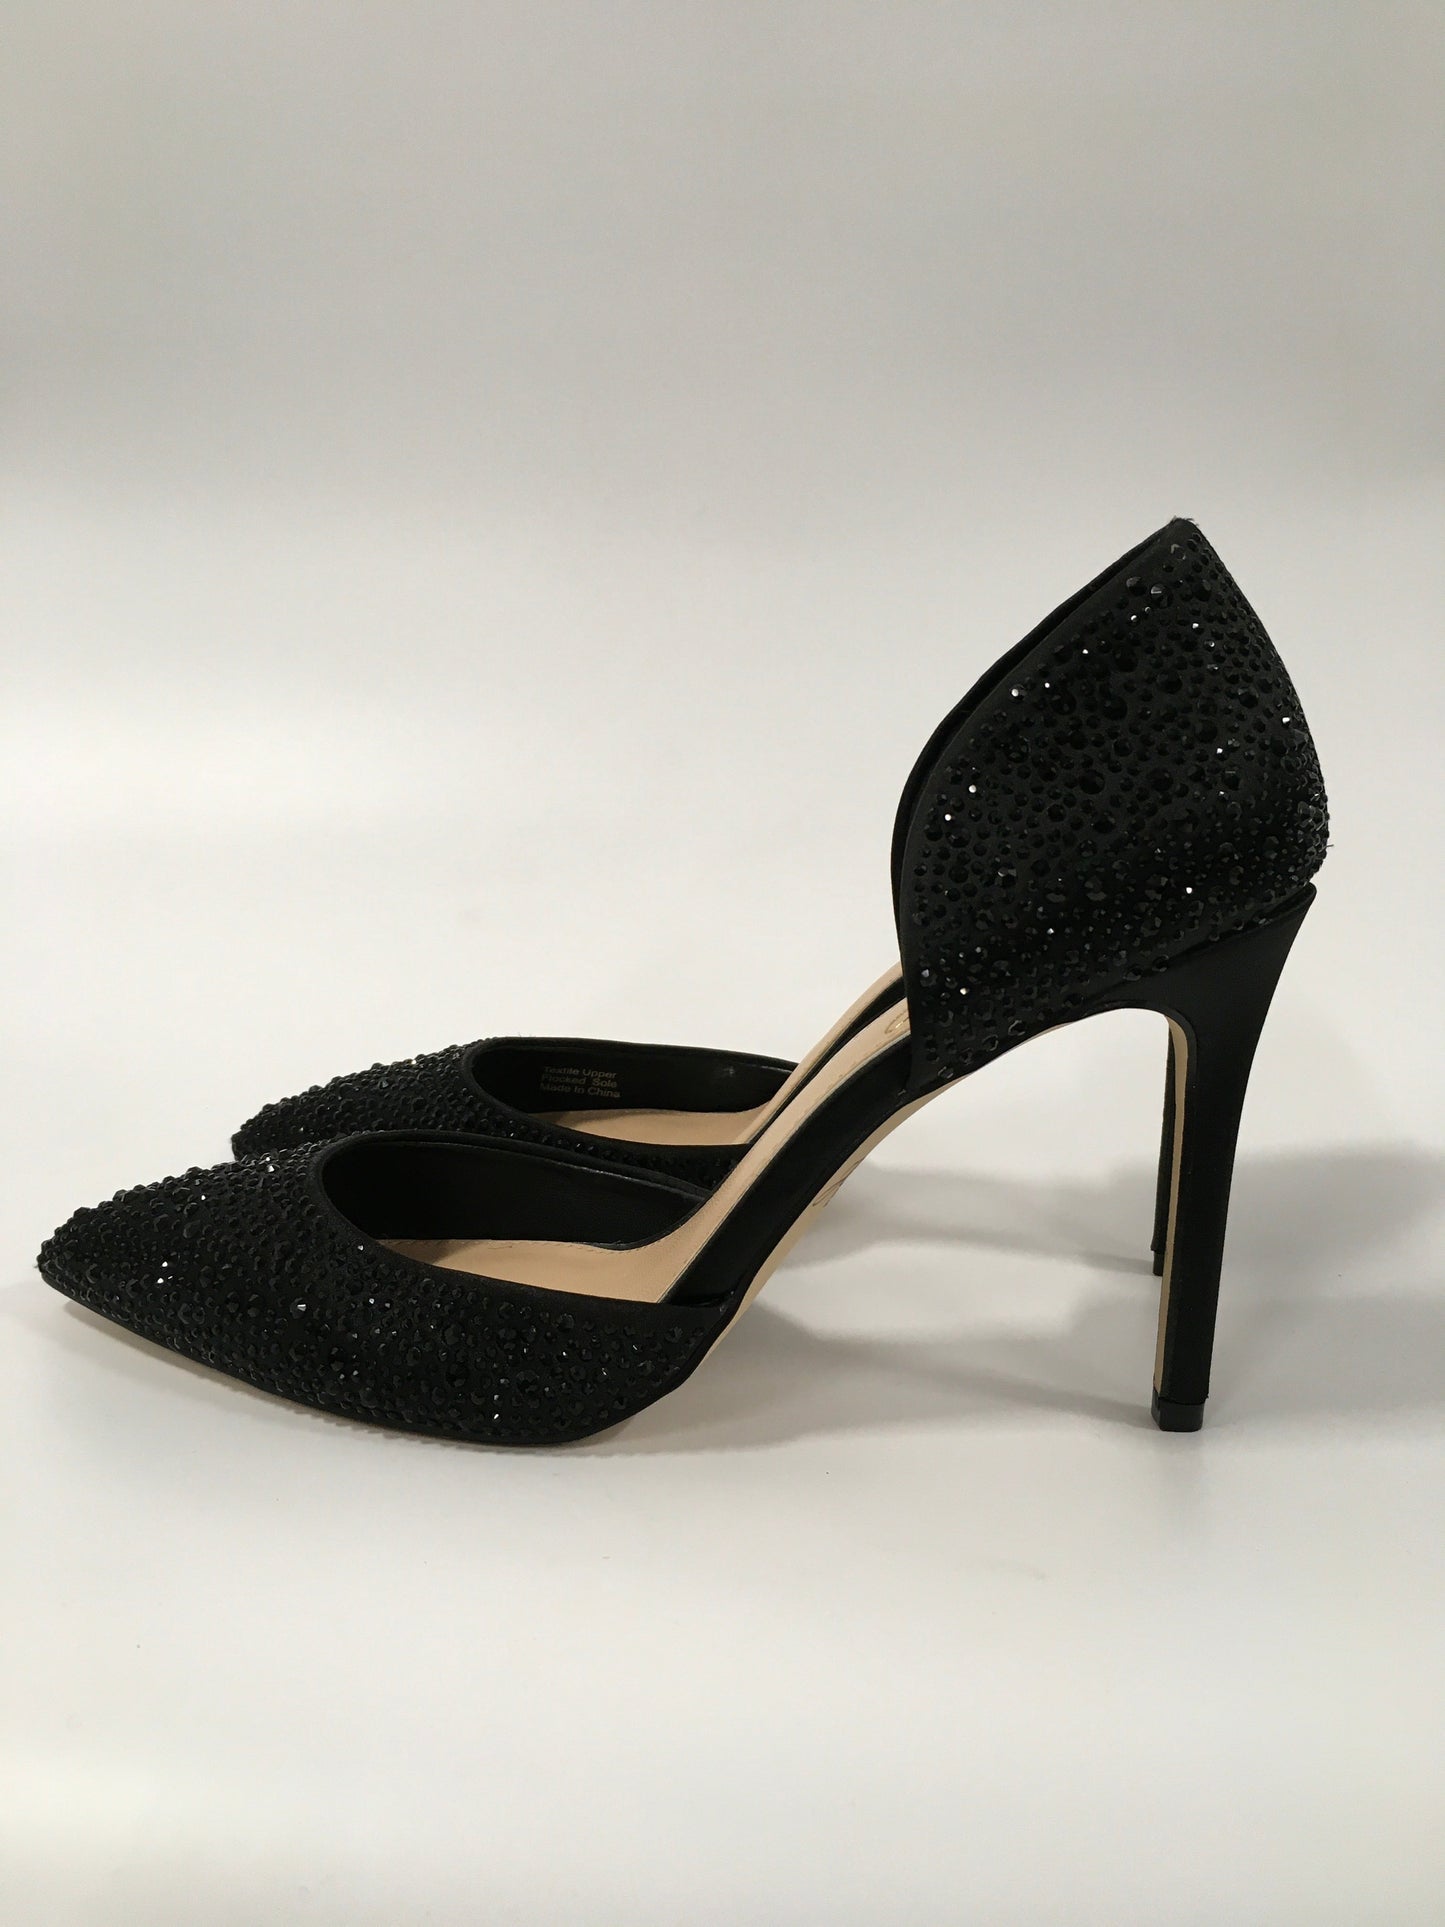 Black Shoes Heels Stiletto Badgley Mischka, Size 6